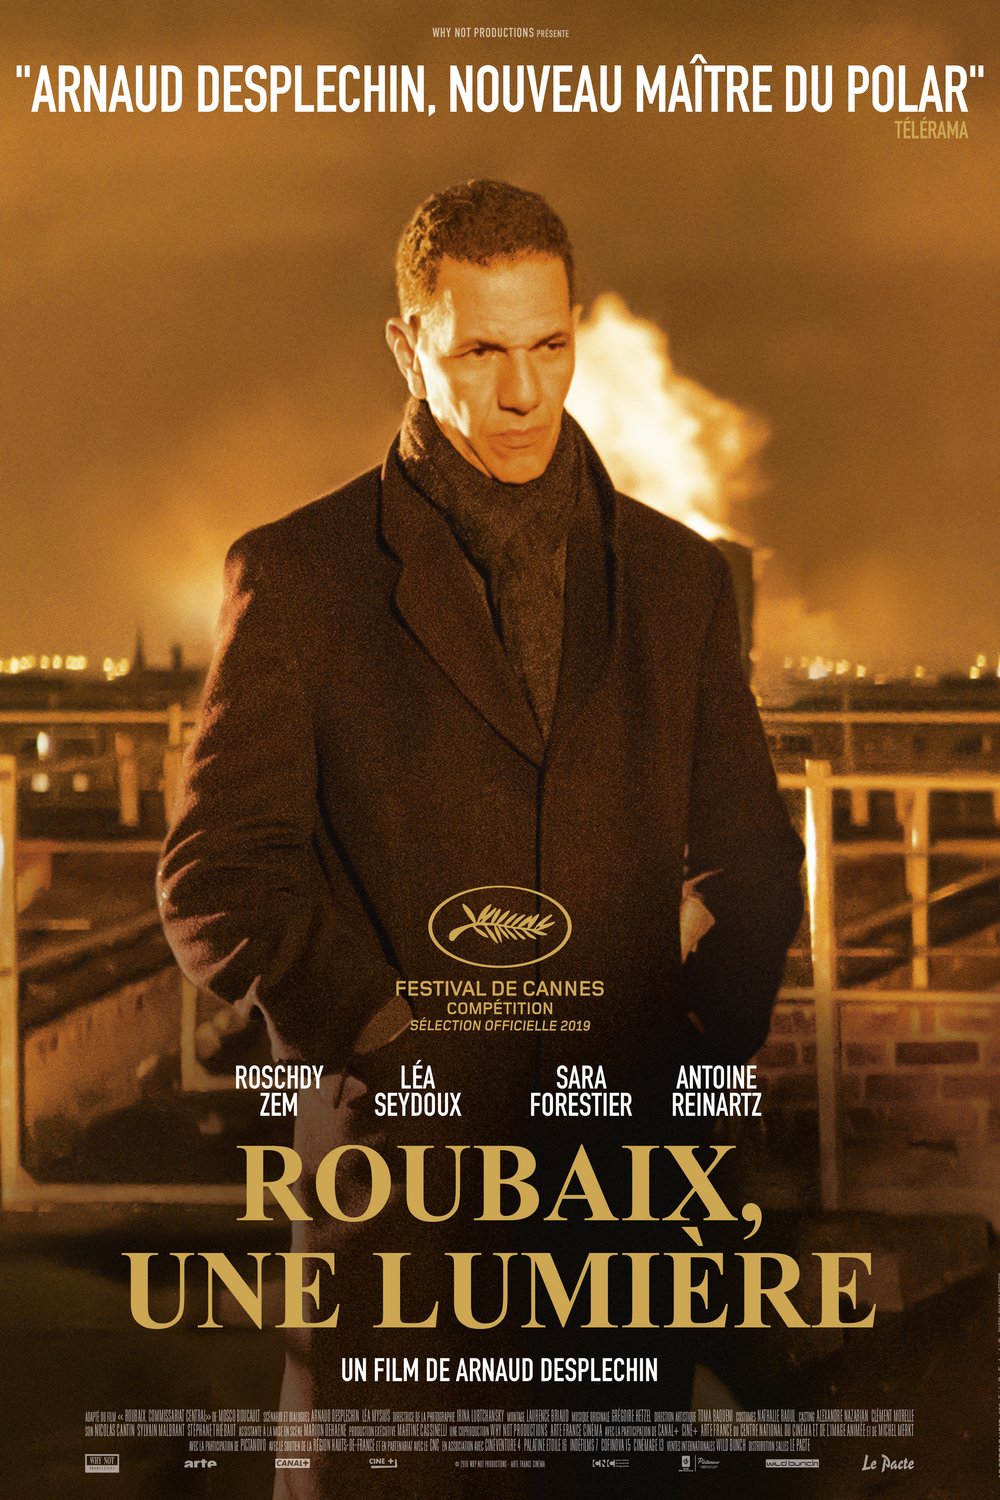 Poster of the movie Roubaix, une lumière